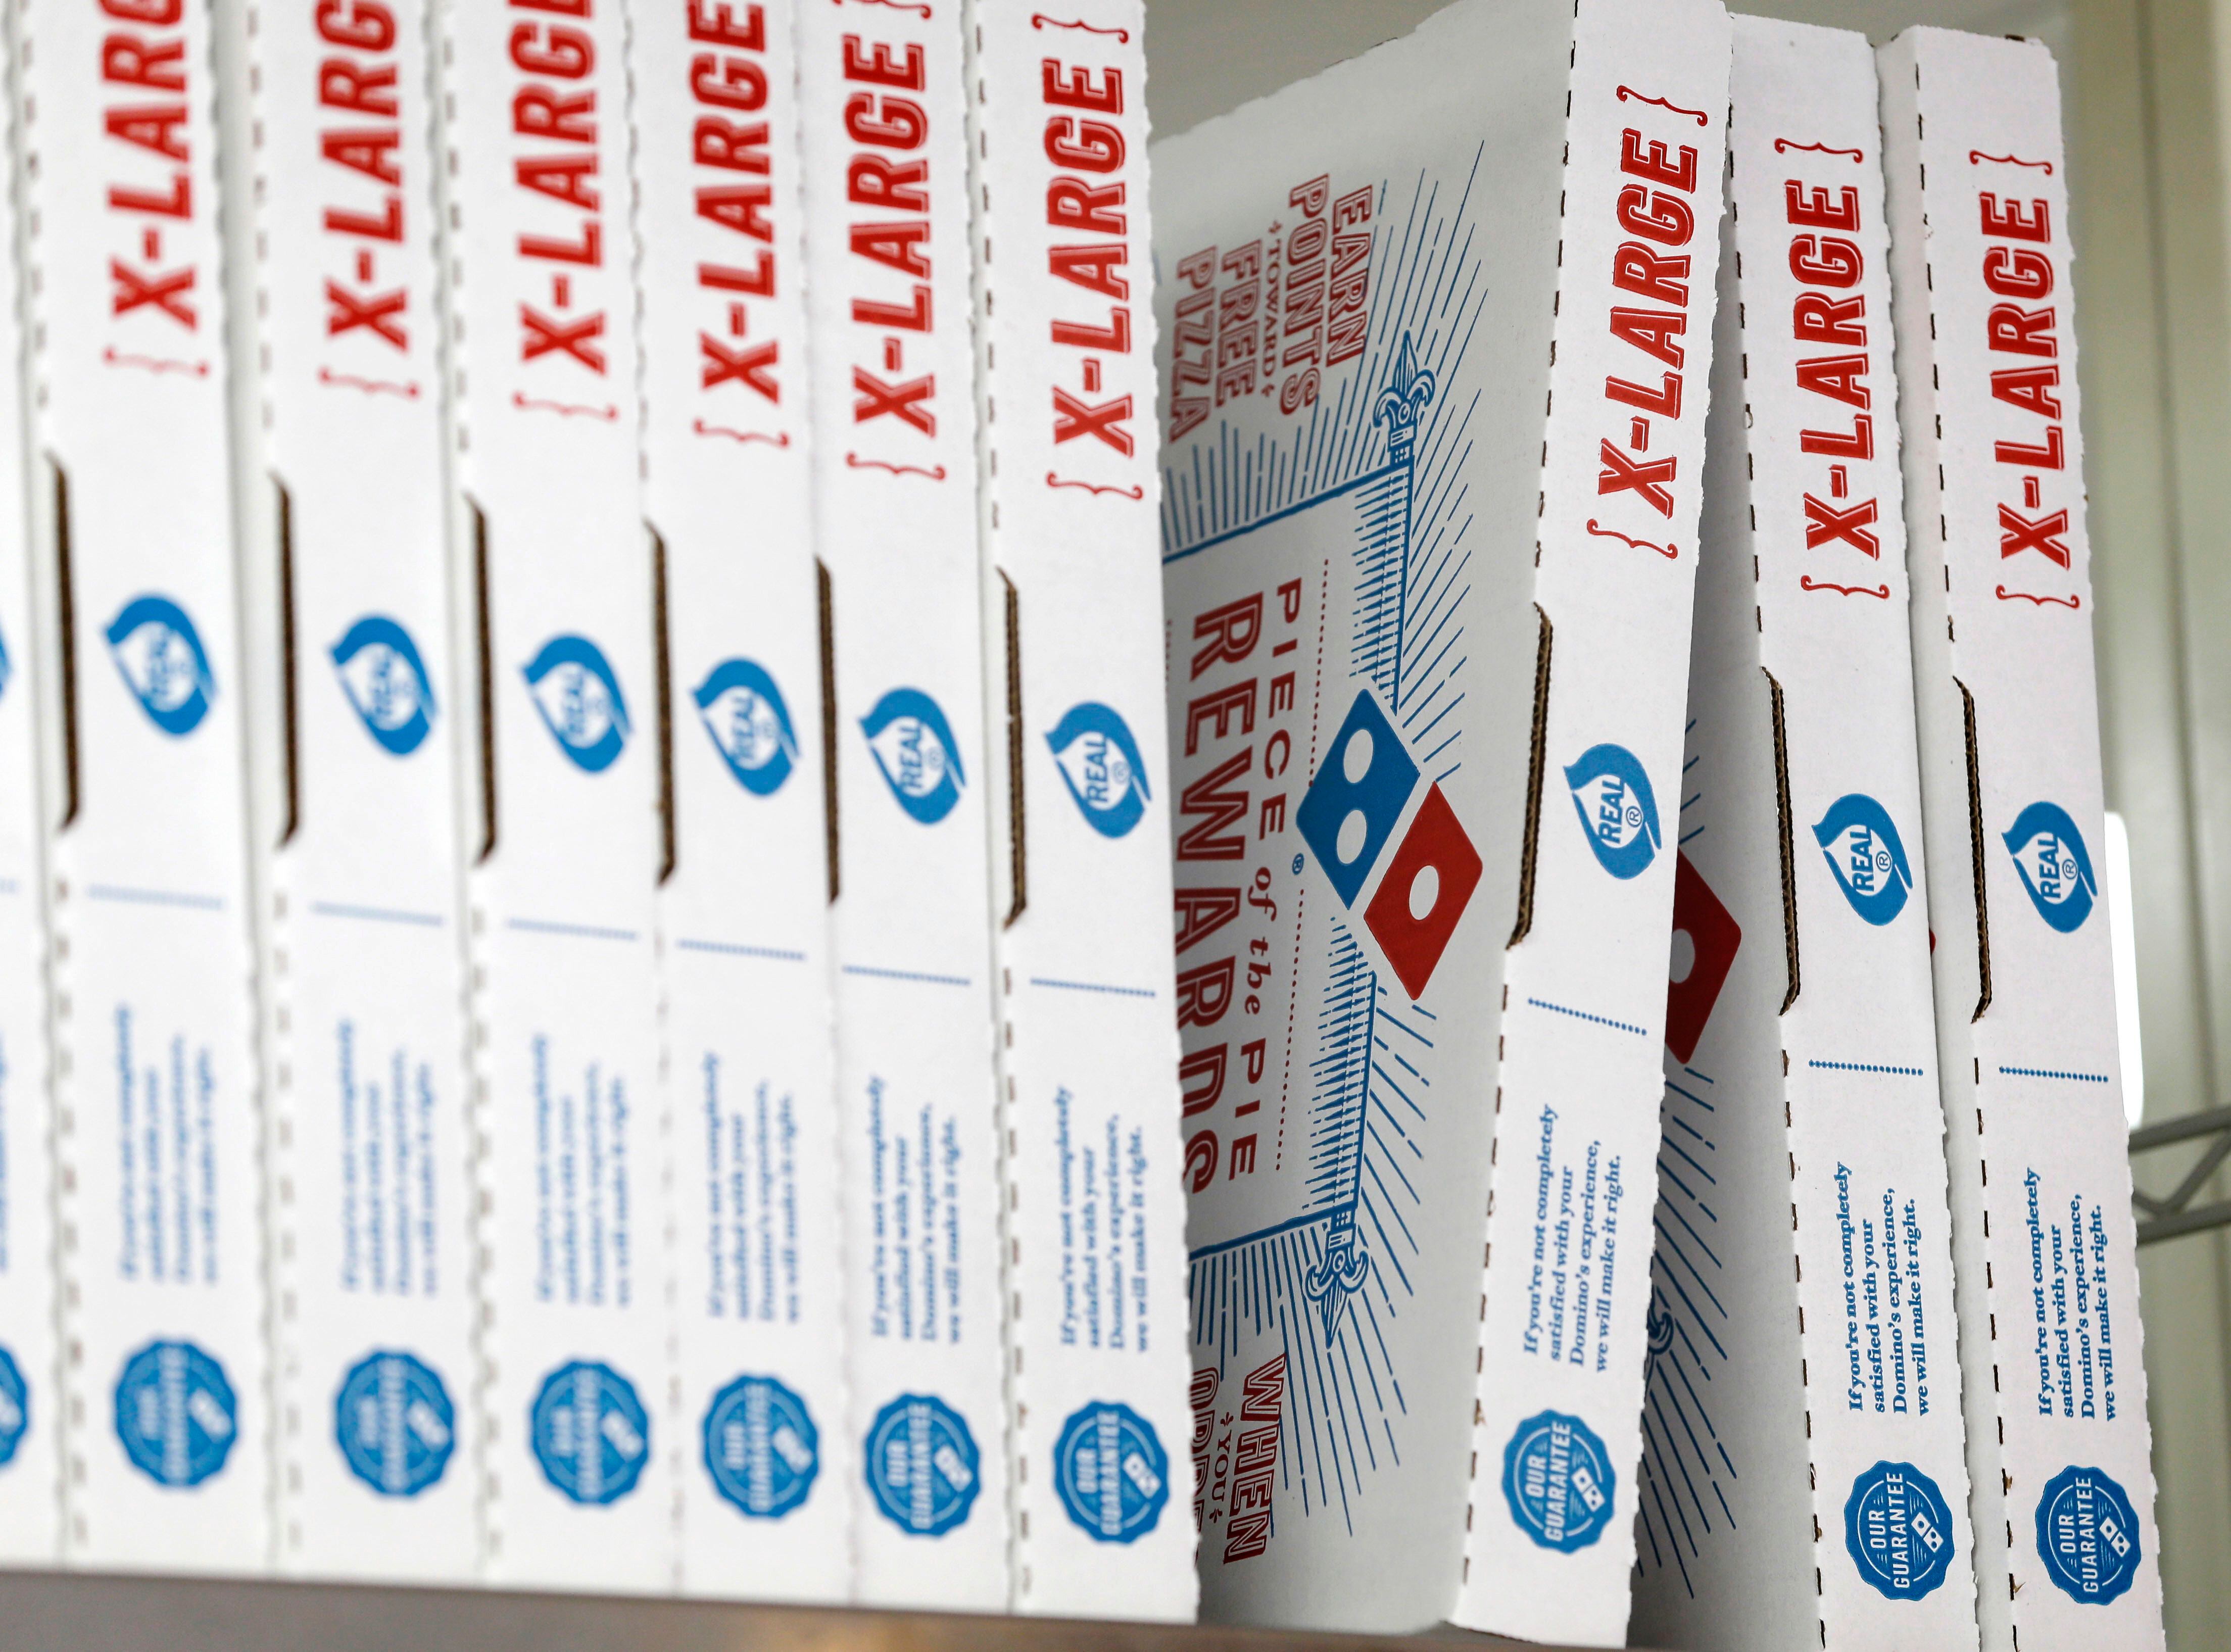 (Alan Diaz | AP) This 2016 photo shows Domino's Pizza boxes.